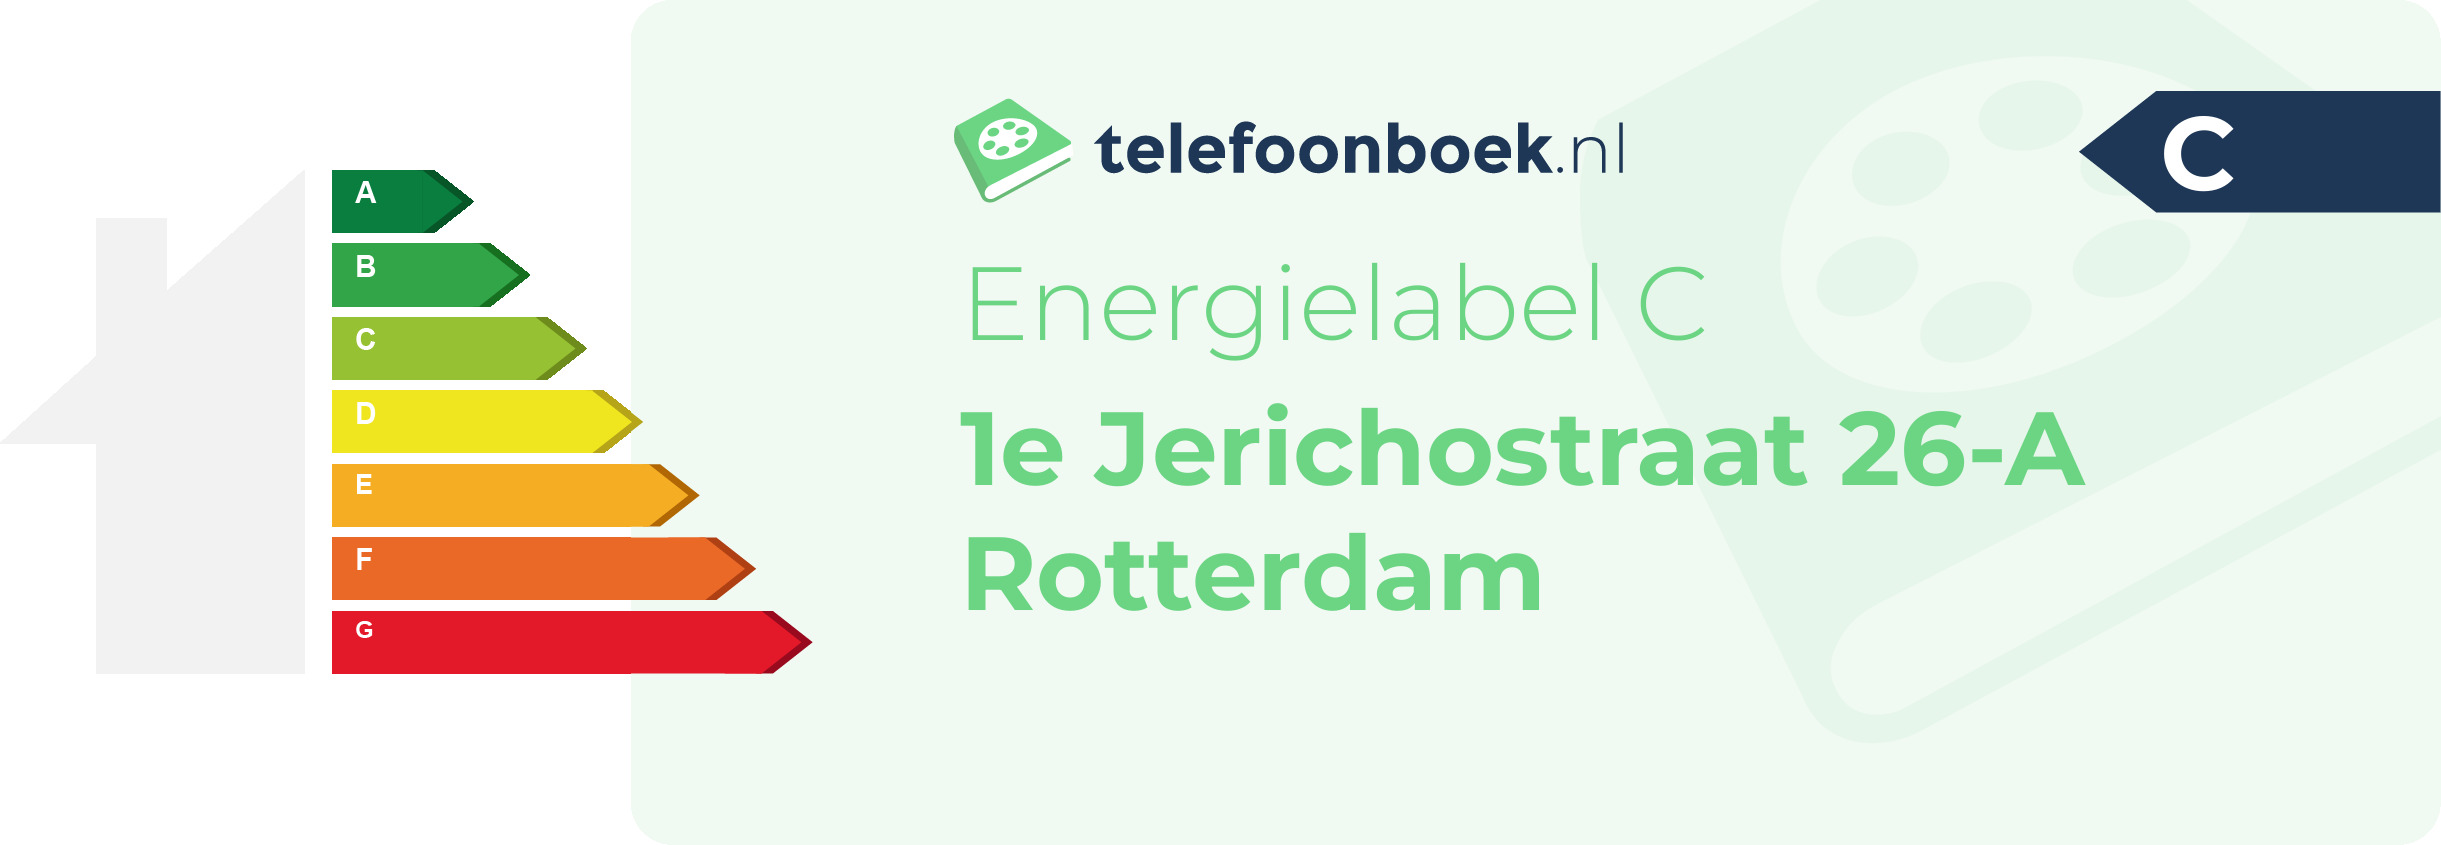 Energielabel 1e Jerichostraat 26-A Rotterdam